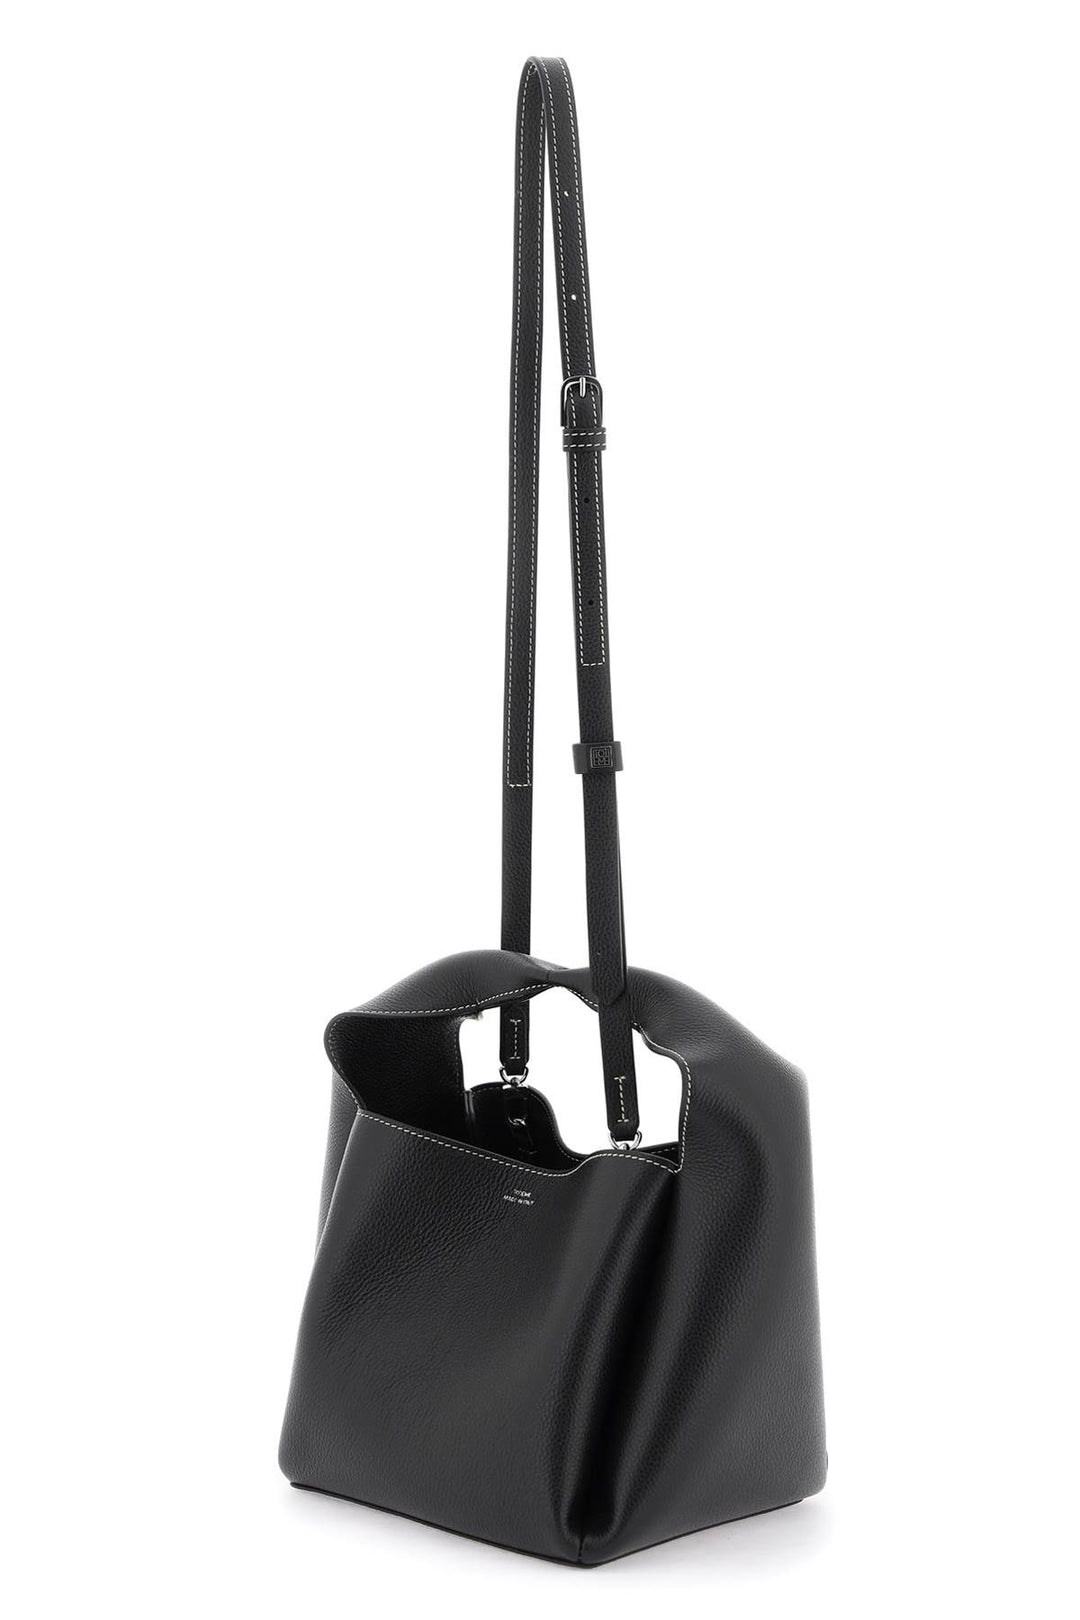 Toteme Hammered Leather Bucket Bag   Black